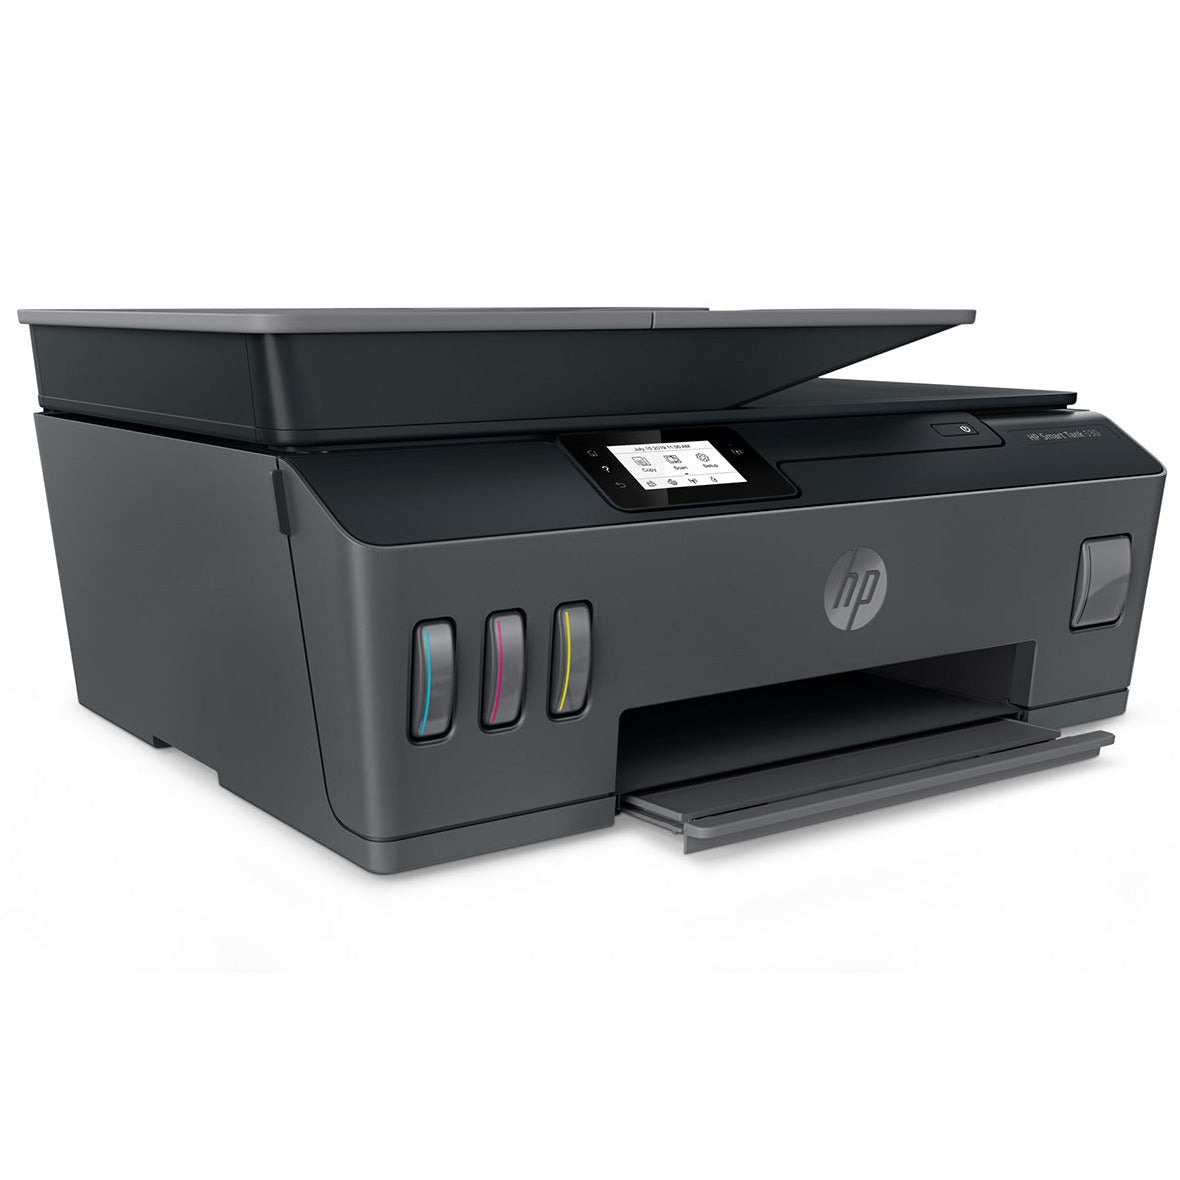 Impresora de tanque de tinta HP Ink Tank 530, 11ppm blanco/negro, 5ppm a color, 4800x1200dpi, Wi-Fi - Multimax